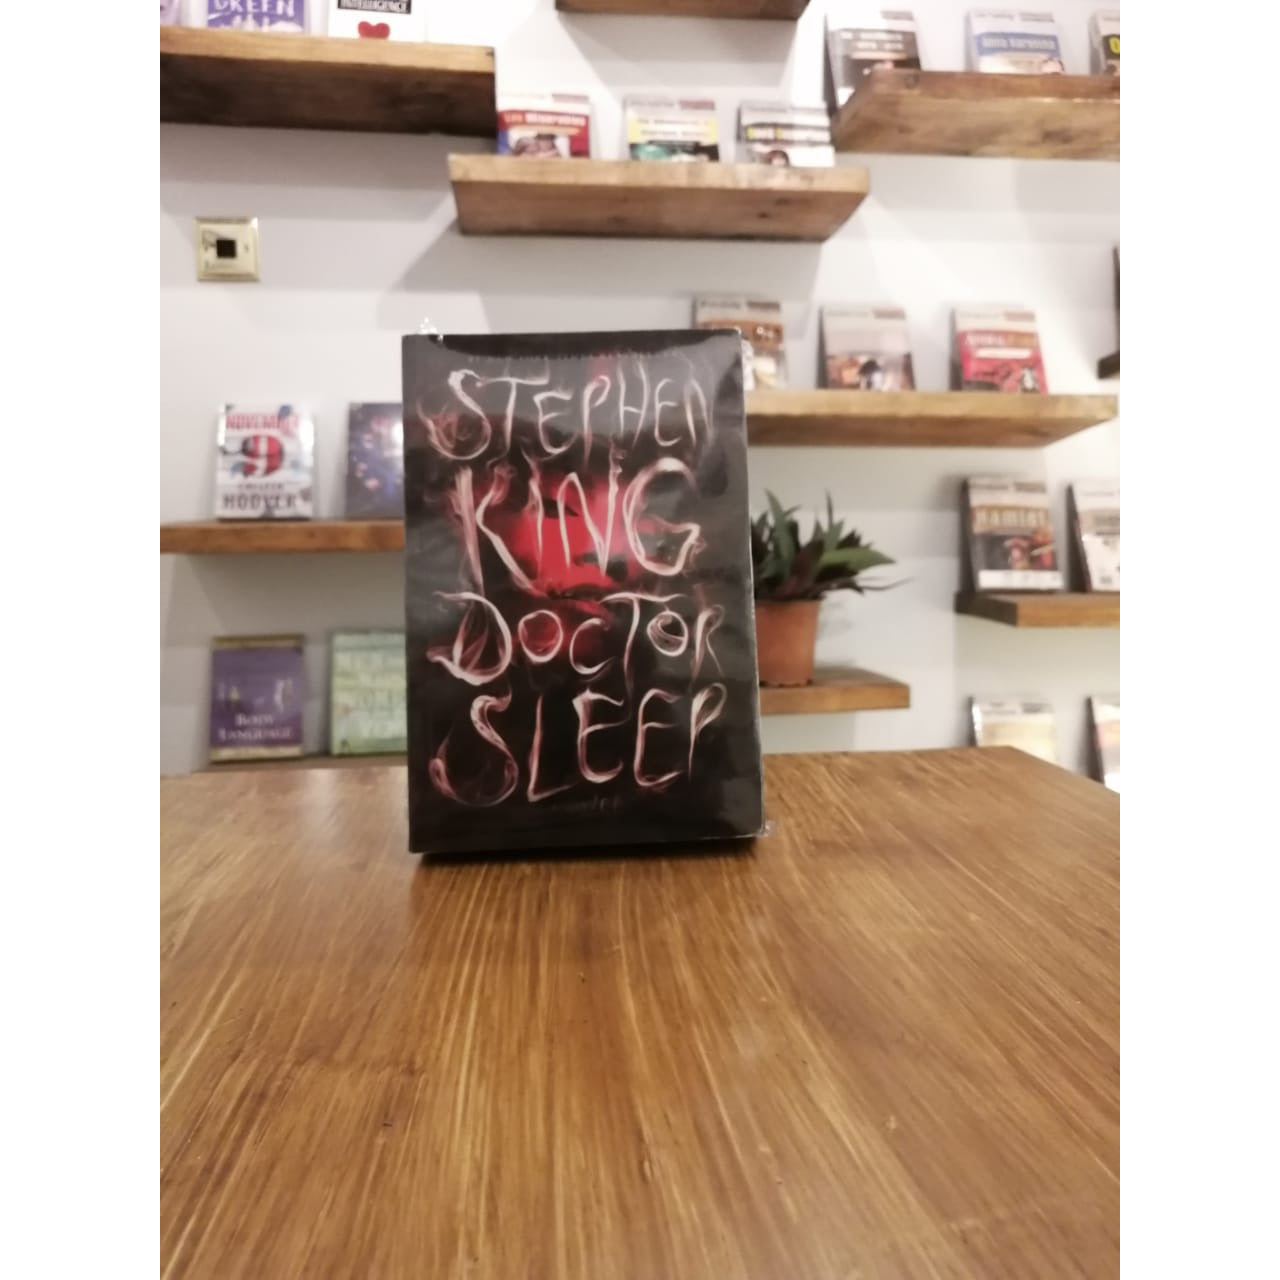 Doctor Sleep By Stephen King